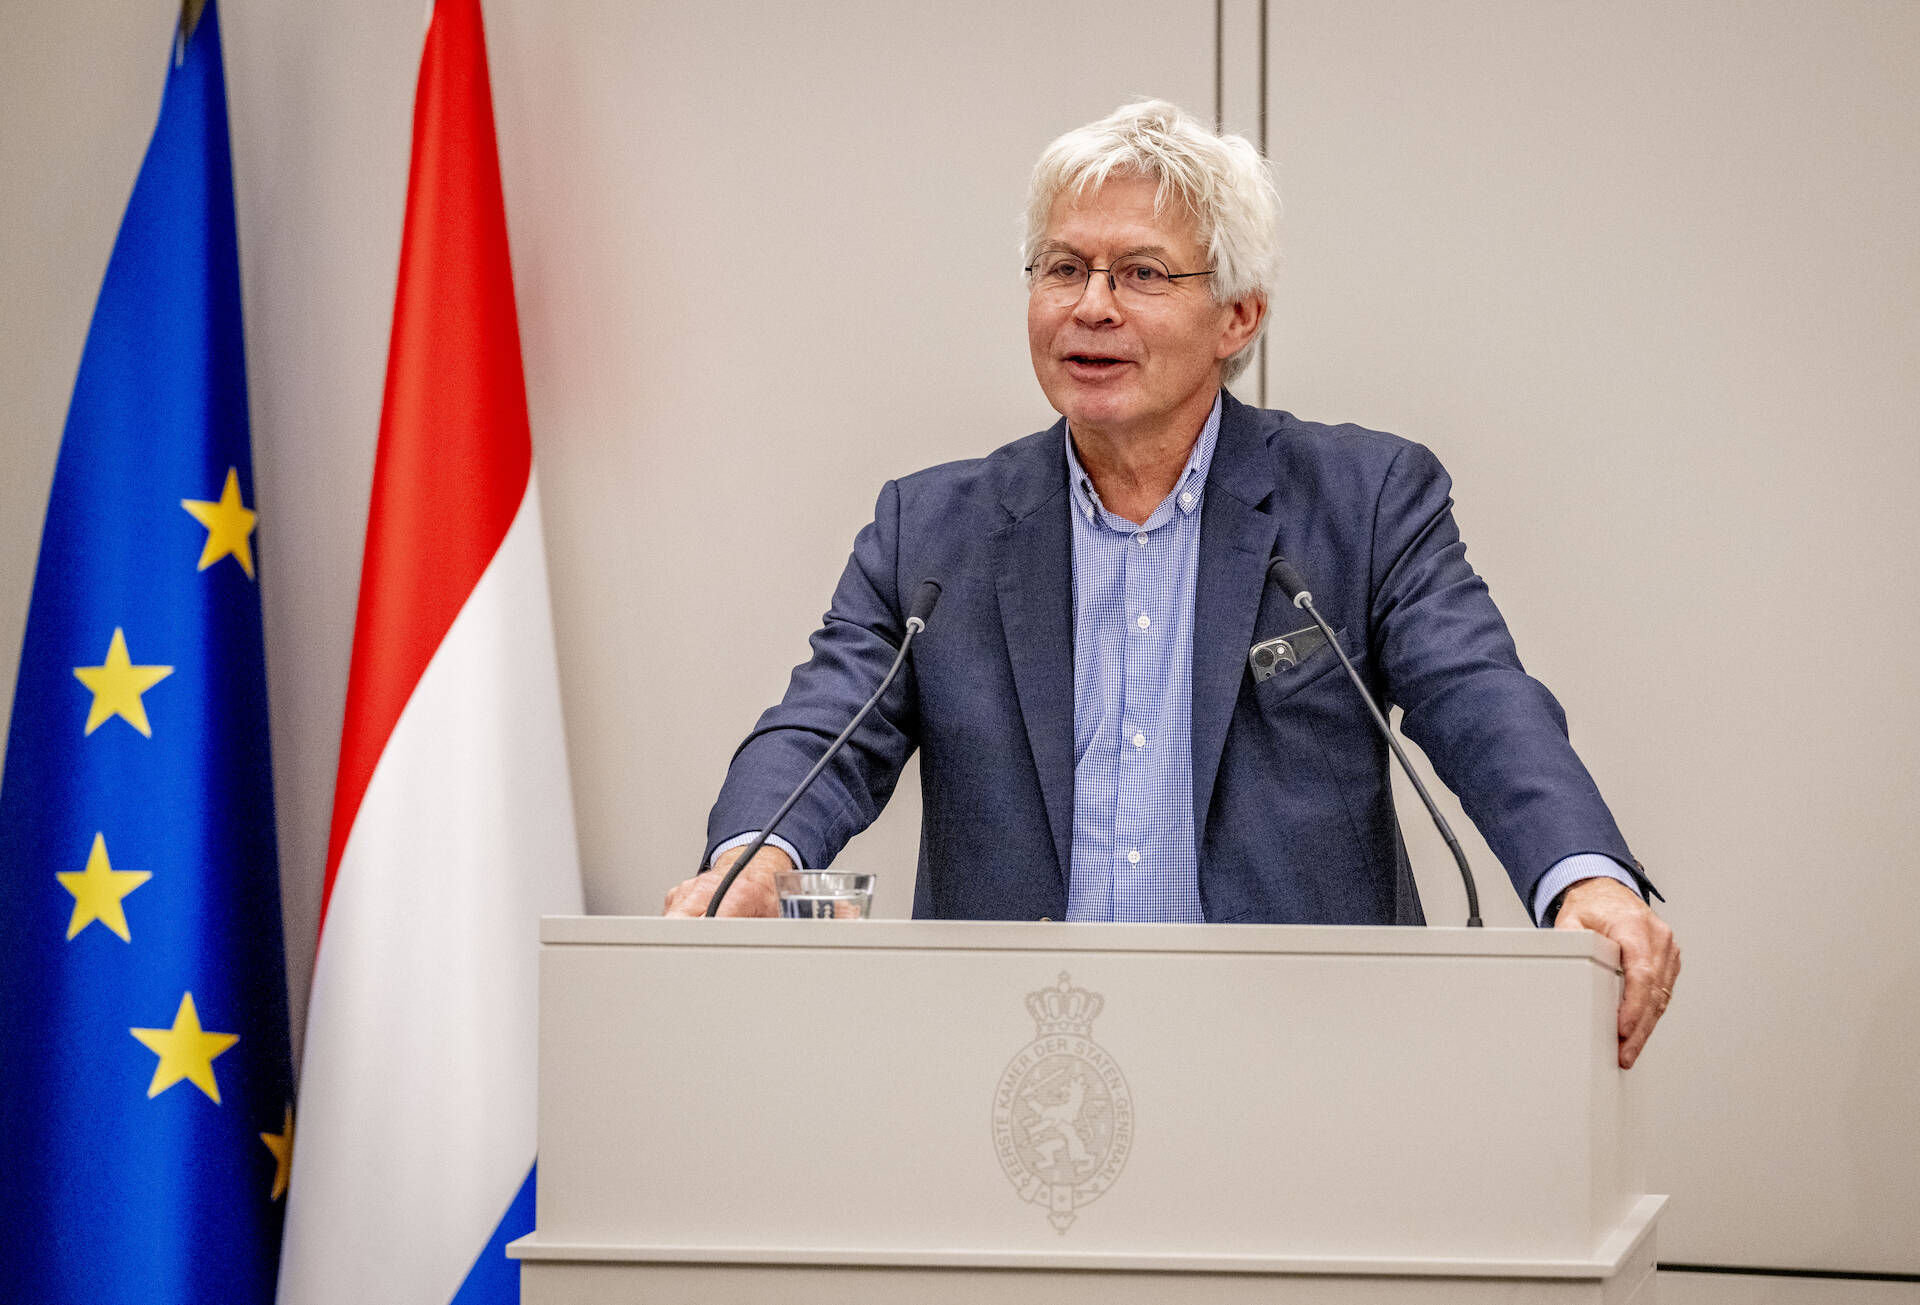 Senator Crone (GroenLinks-PvdA)